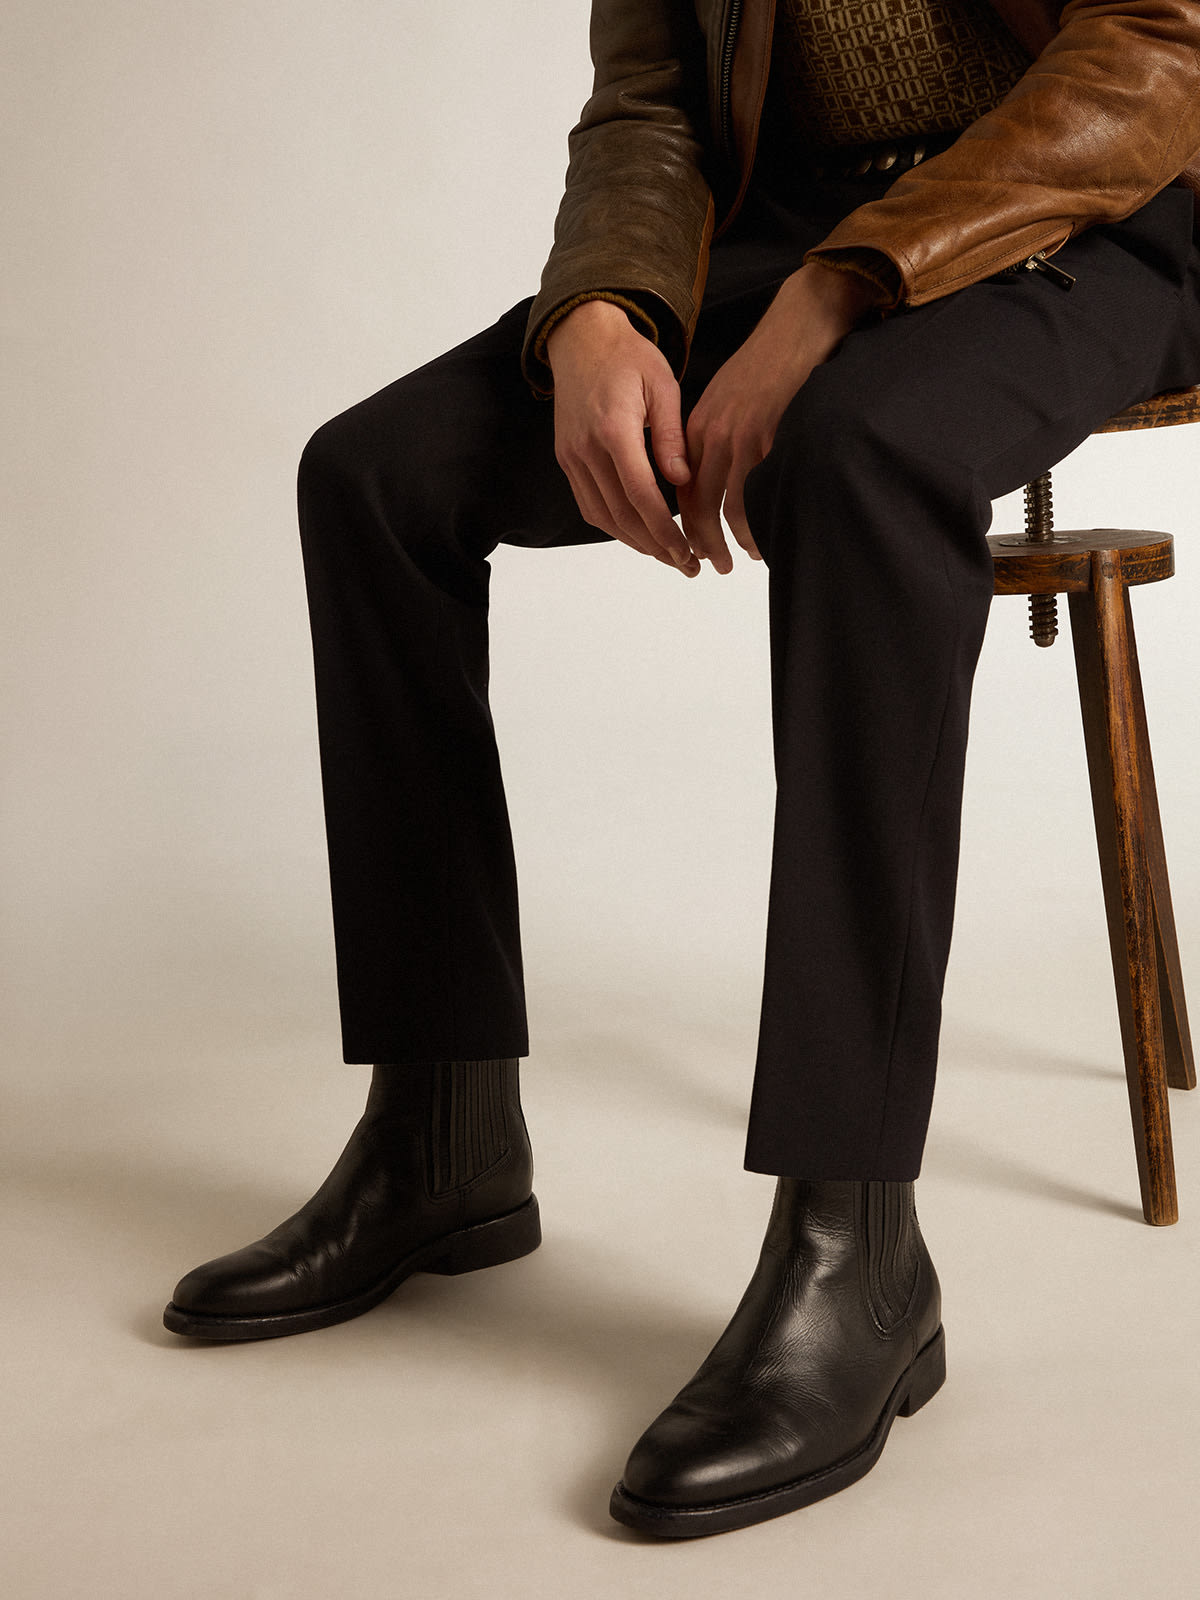 Men's Chelsea boots in black leather | Golden Goose